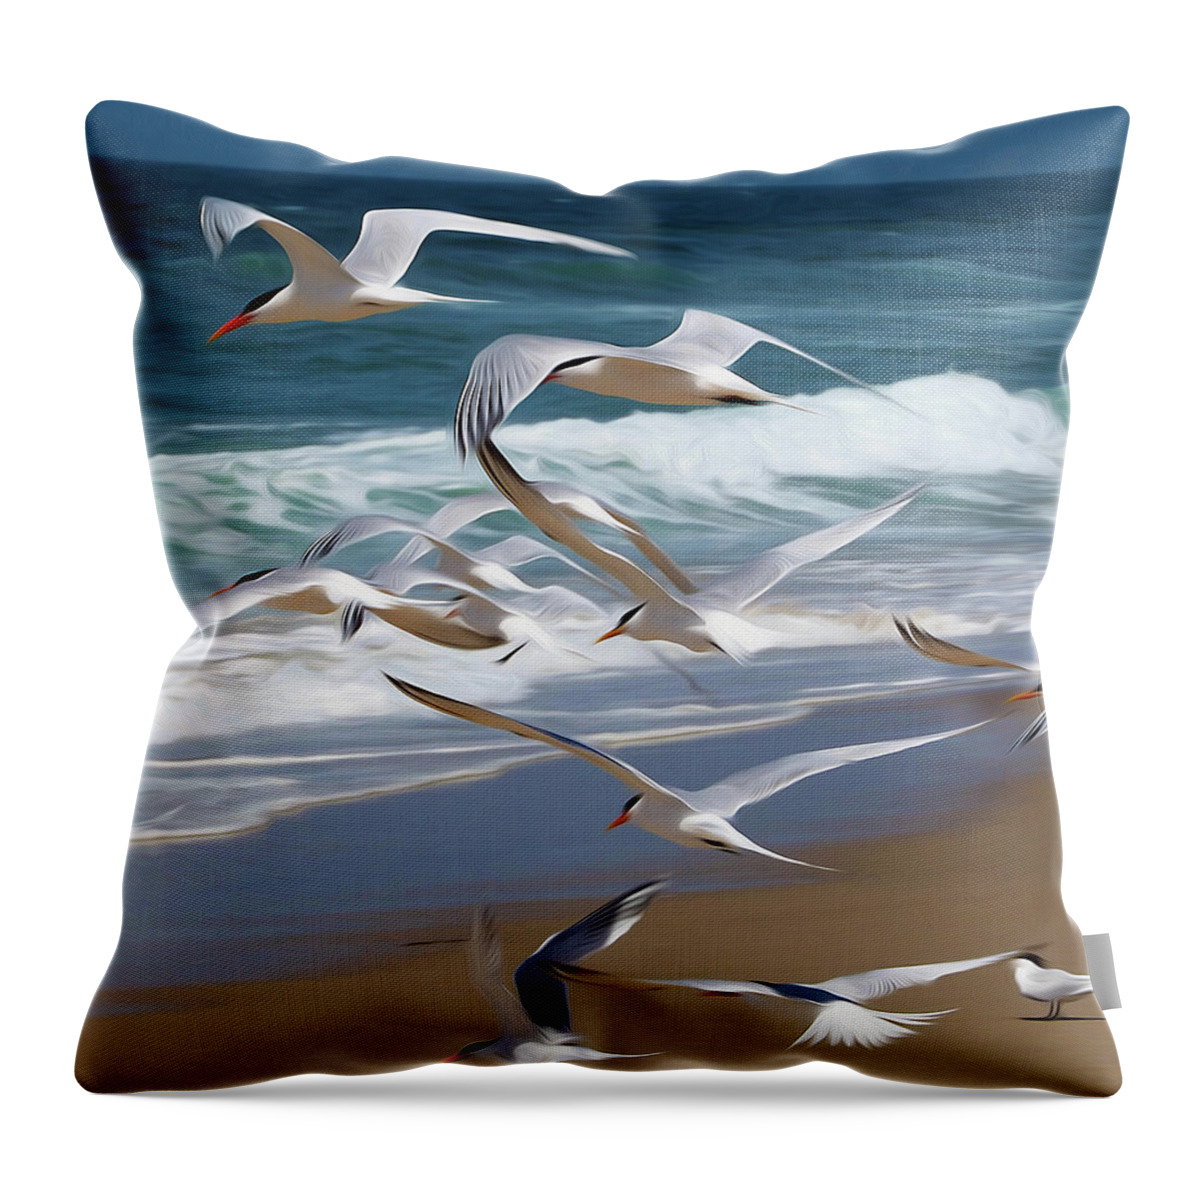 Birds Throw Pillow featuring the photograph Aloft Again by Joe Schofield